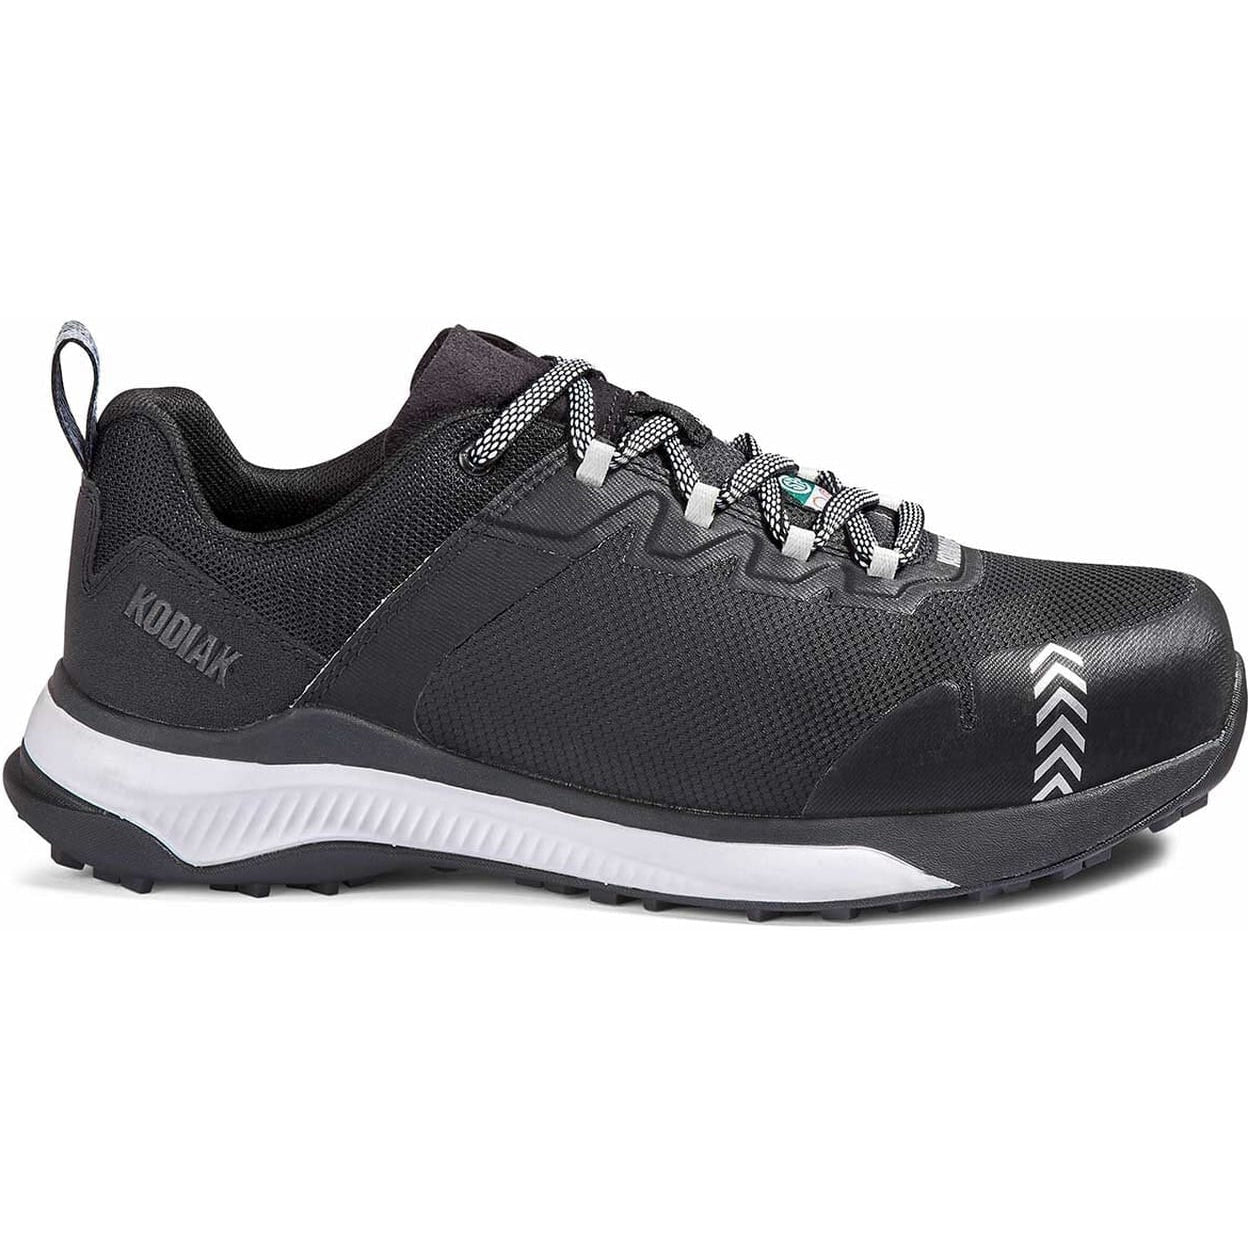 Kodiak Women's Quicktrail Low CT Athletic Safety Work Shoe -Black- 4TGXBK 5 / Medium / Black - Overlook Boots